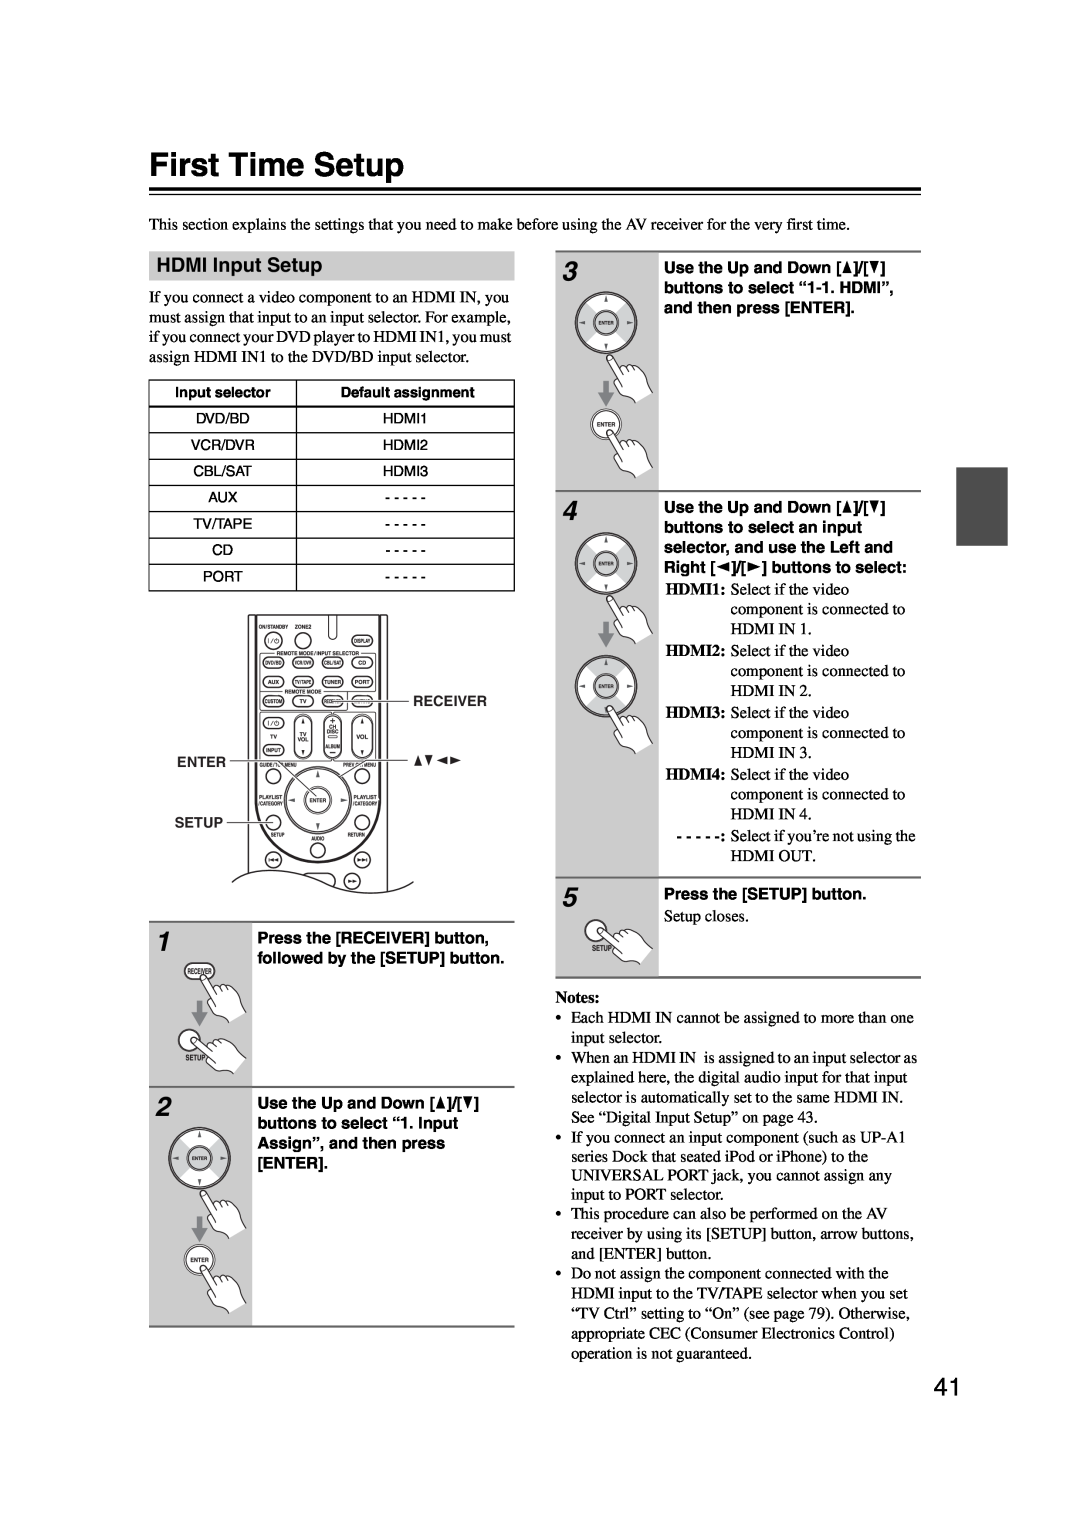 Onkyo HT-S6200, 29344937 instruction manual First Time Setup, HDMI Input Setup, Notes 